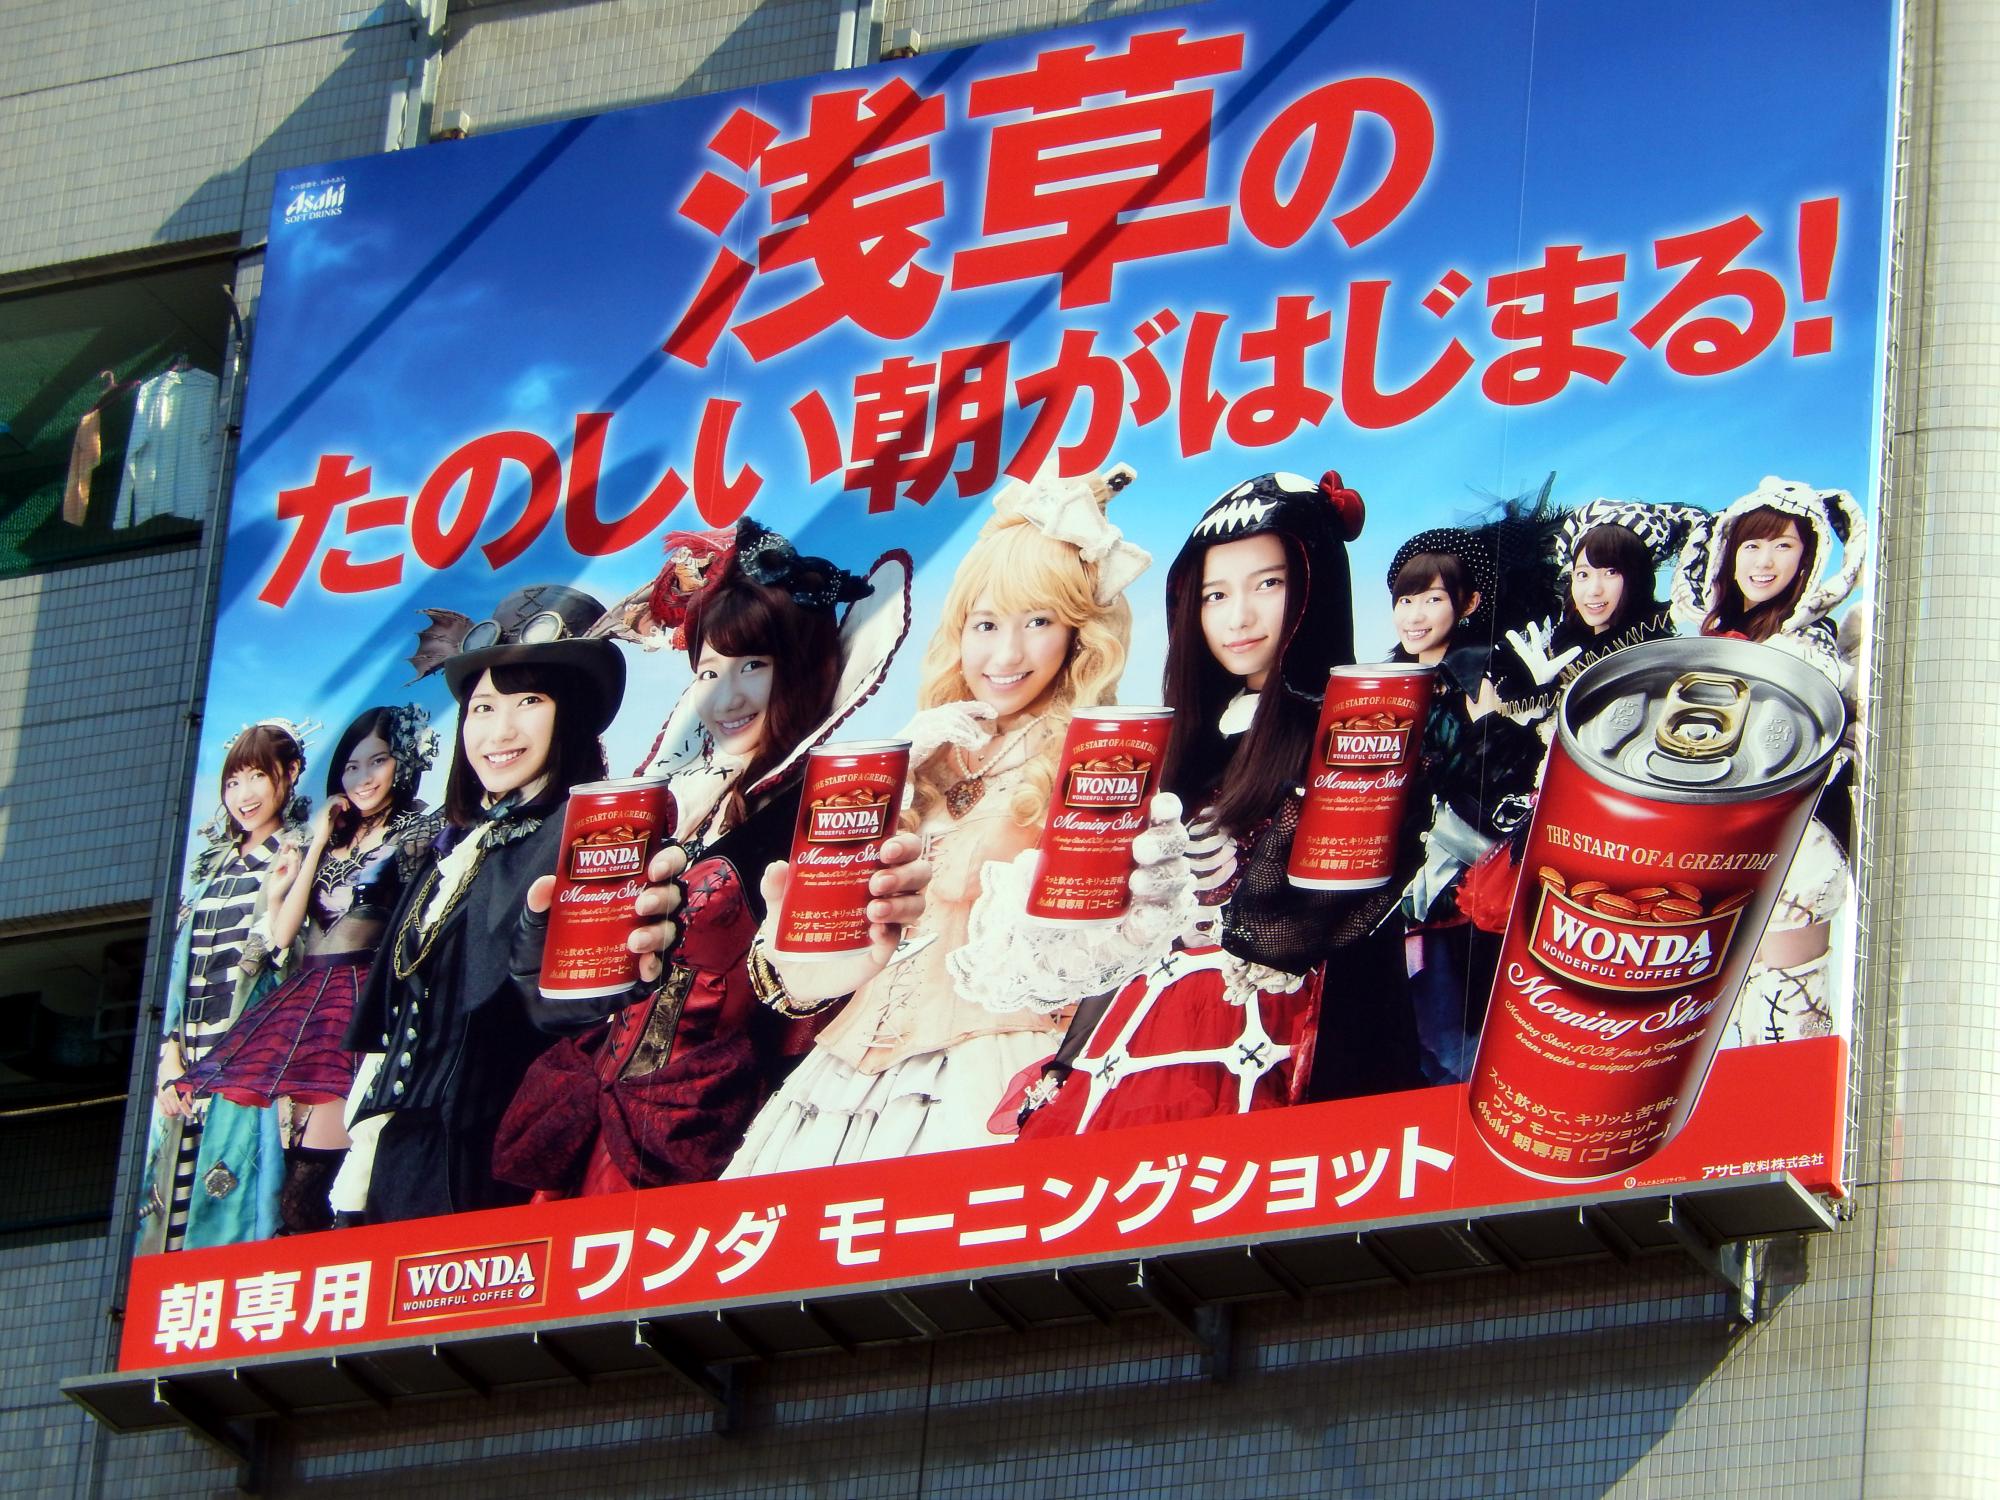 Tokyo (2015) - Maids Billboard